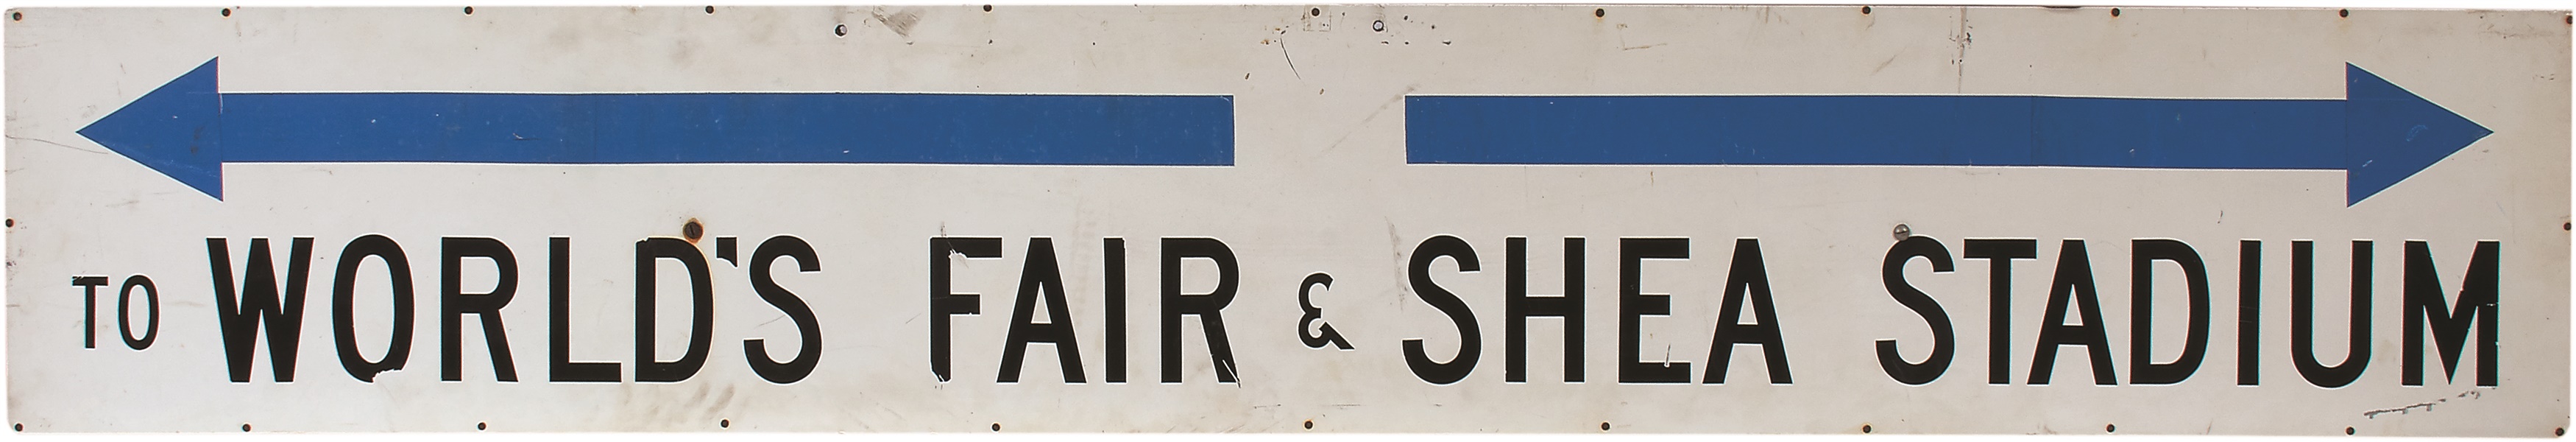 Stadium Artifacts - Magnificent 1964-65 Shea Stadium & New York World's Fair Hand-Painted Wood Sign (72")